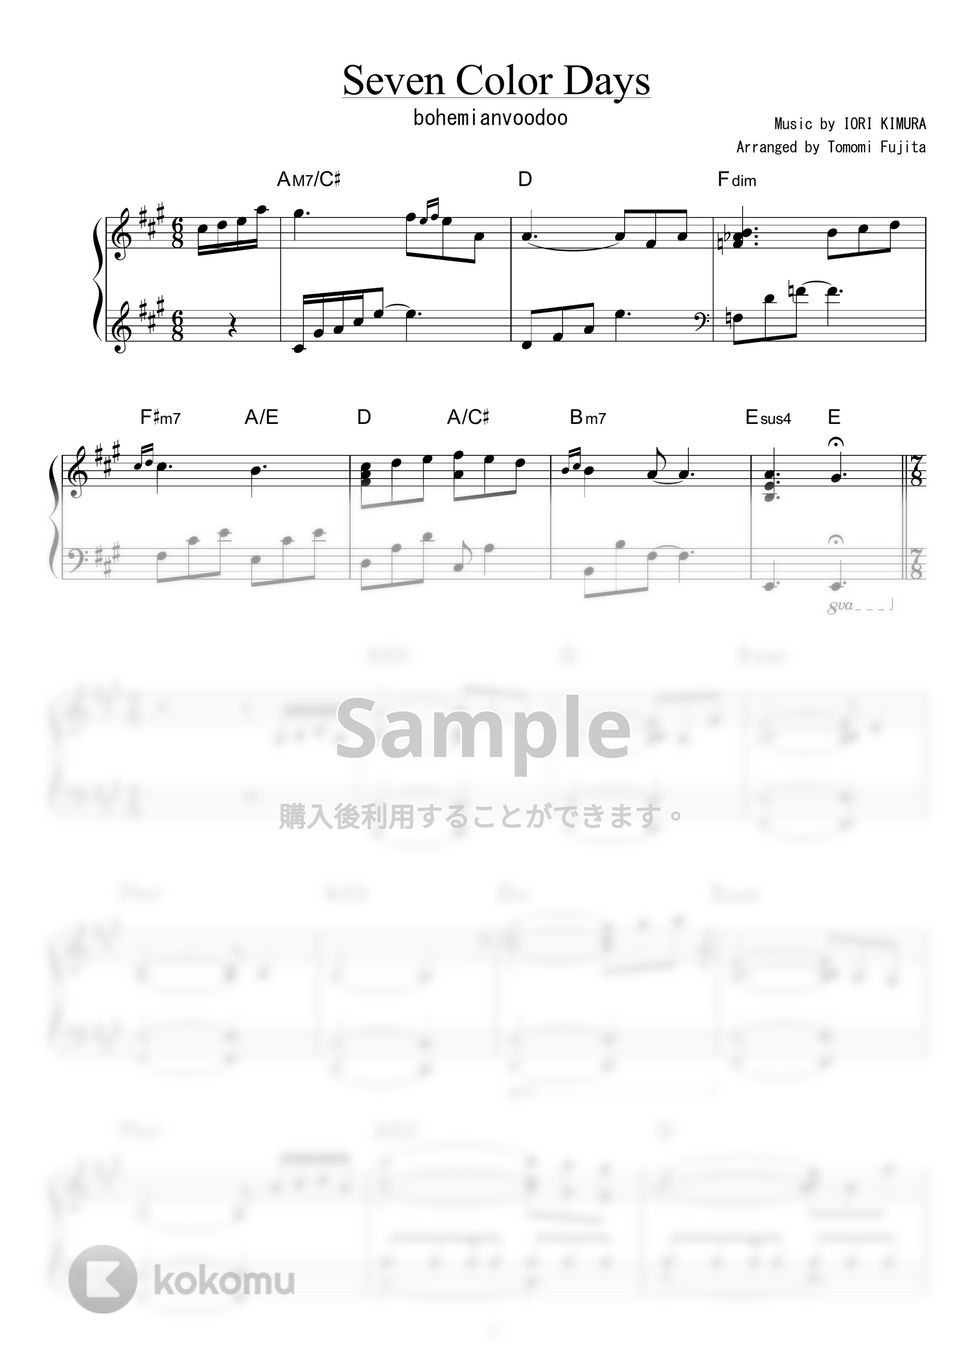 bohemianvoodoo - Seven Color Days by Piano*score